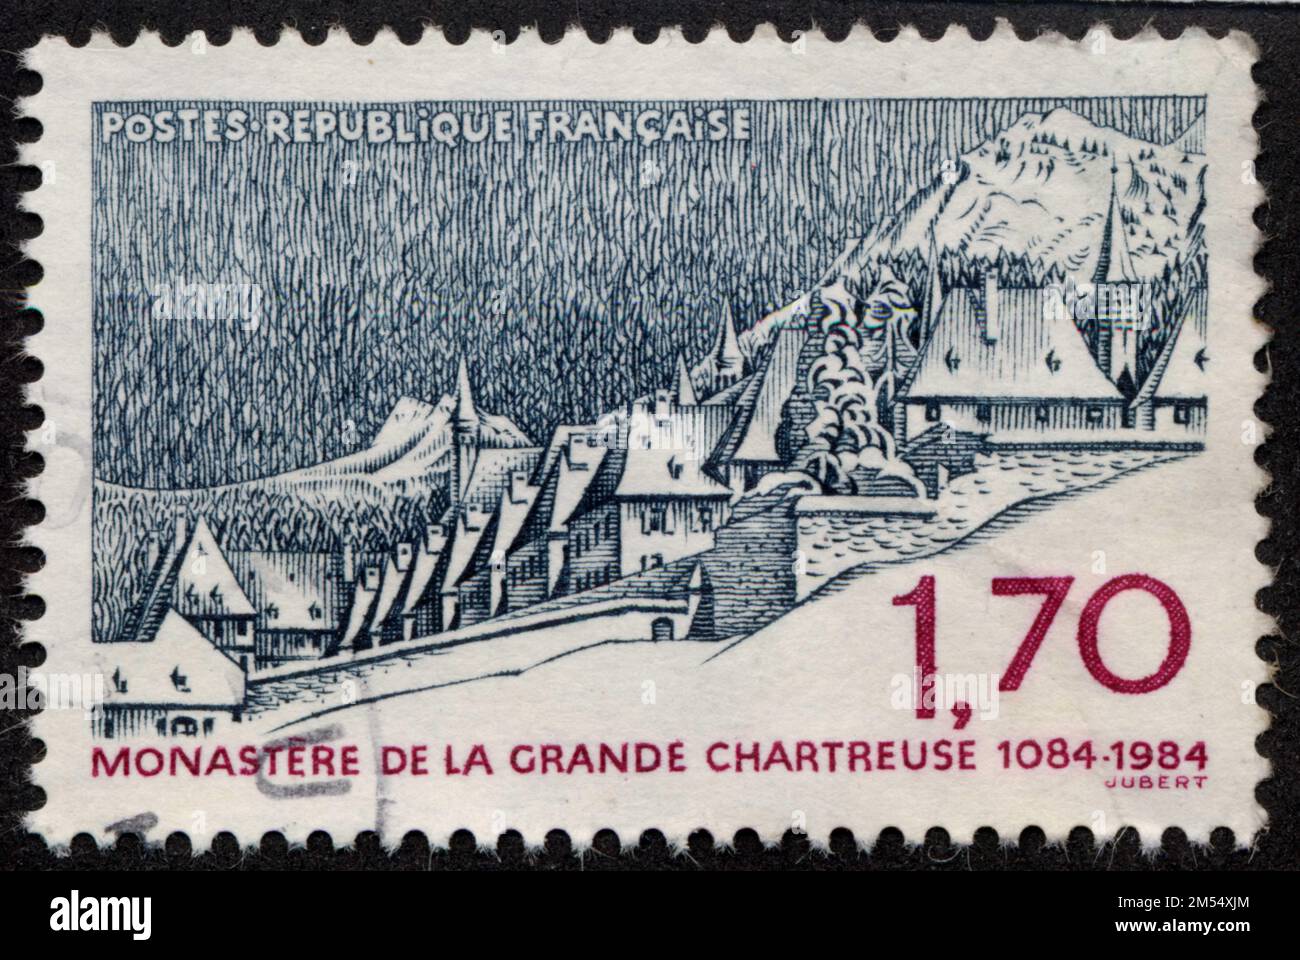 TIMBRE OBLITERE MONASTERE DE LA GRANDE CHARTREUSE  1084-1984.POSTES.REPUBLIQUE FRANCAISE.1,70 Stock Photo - Alamy